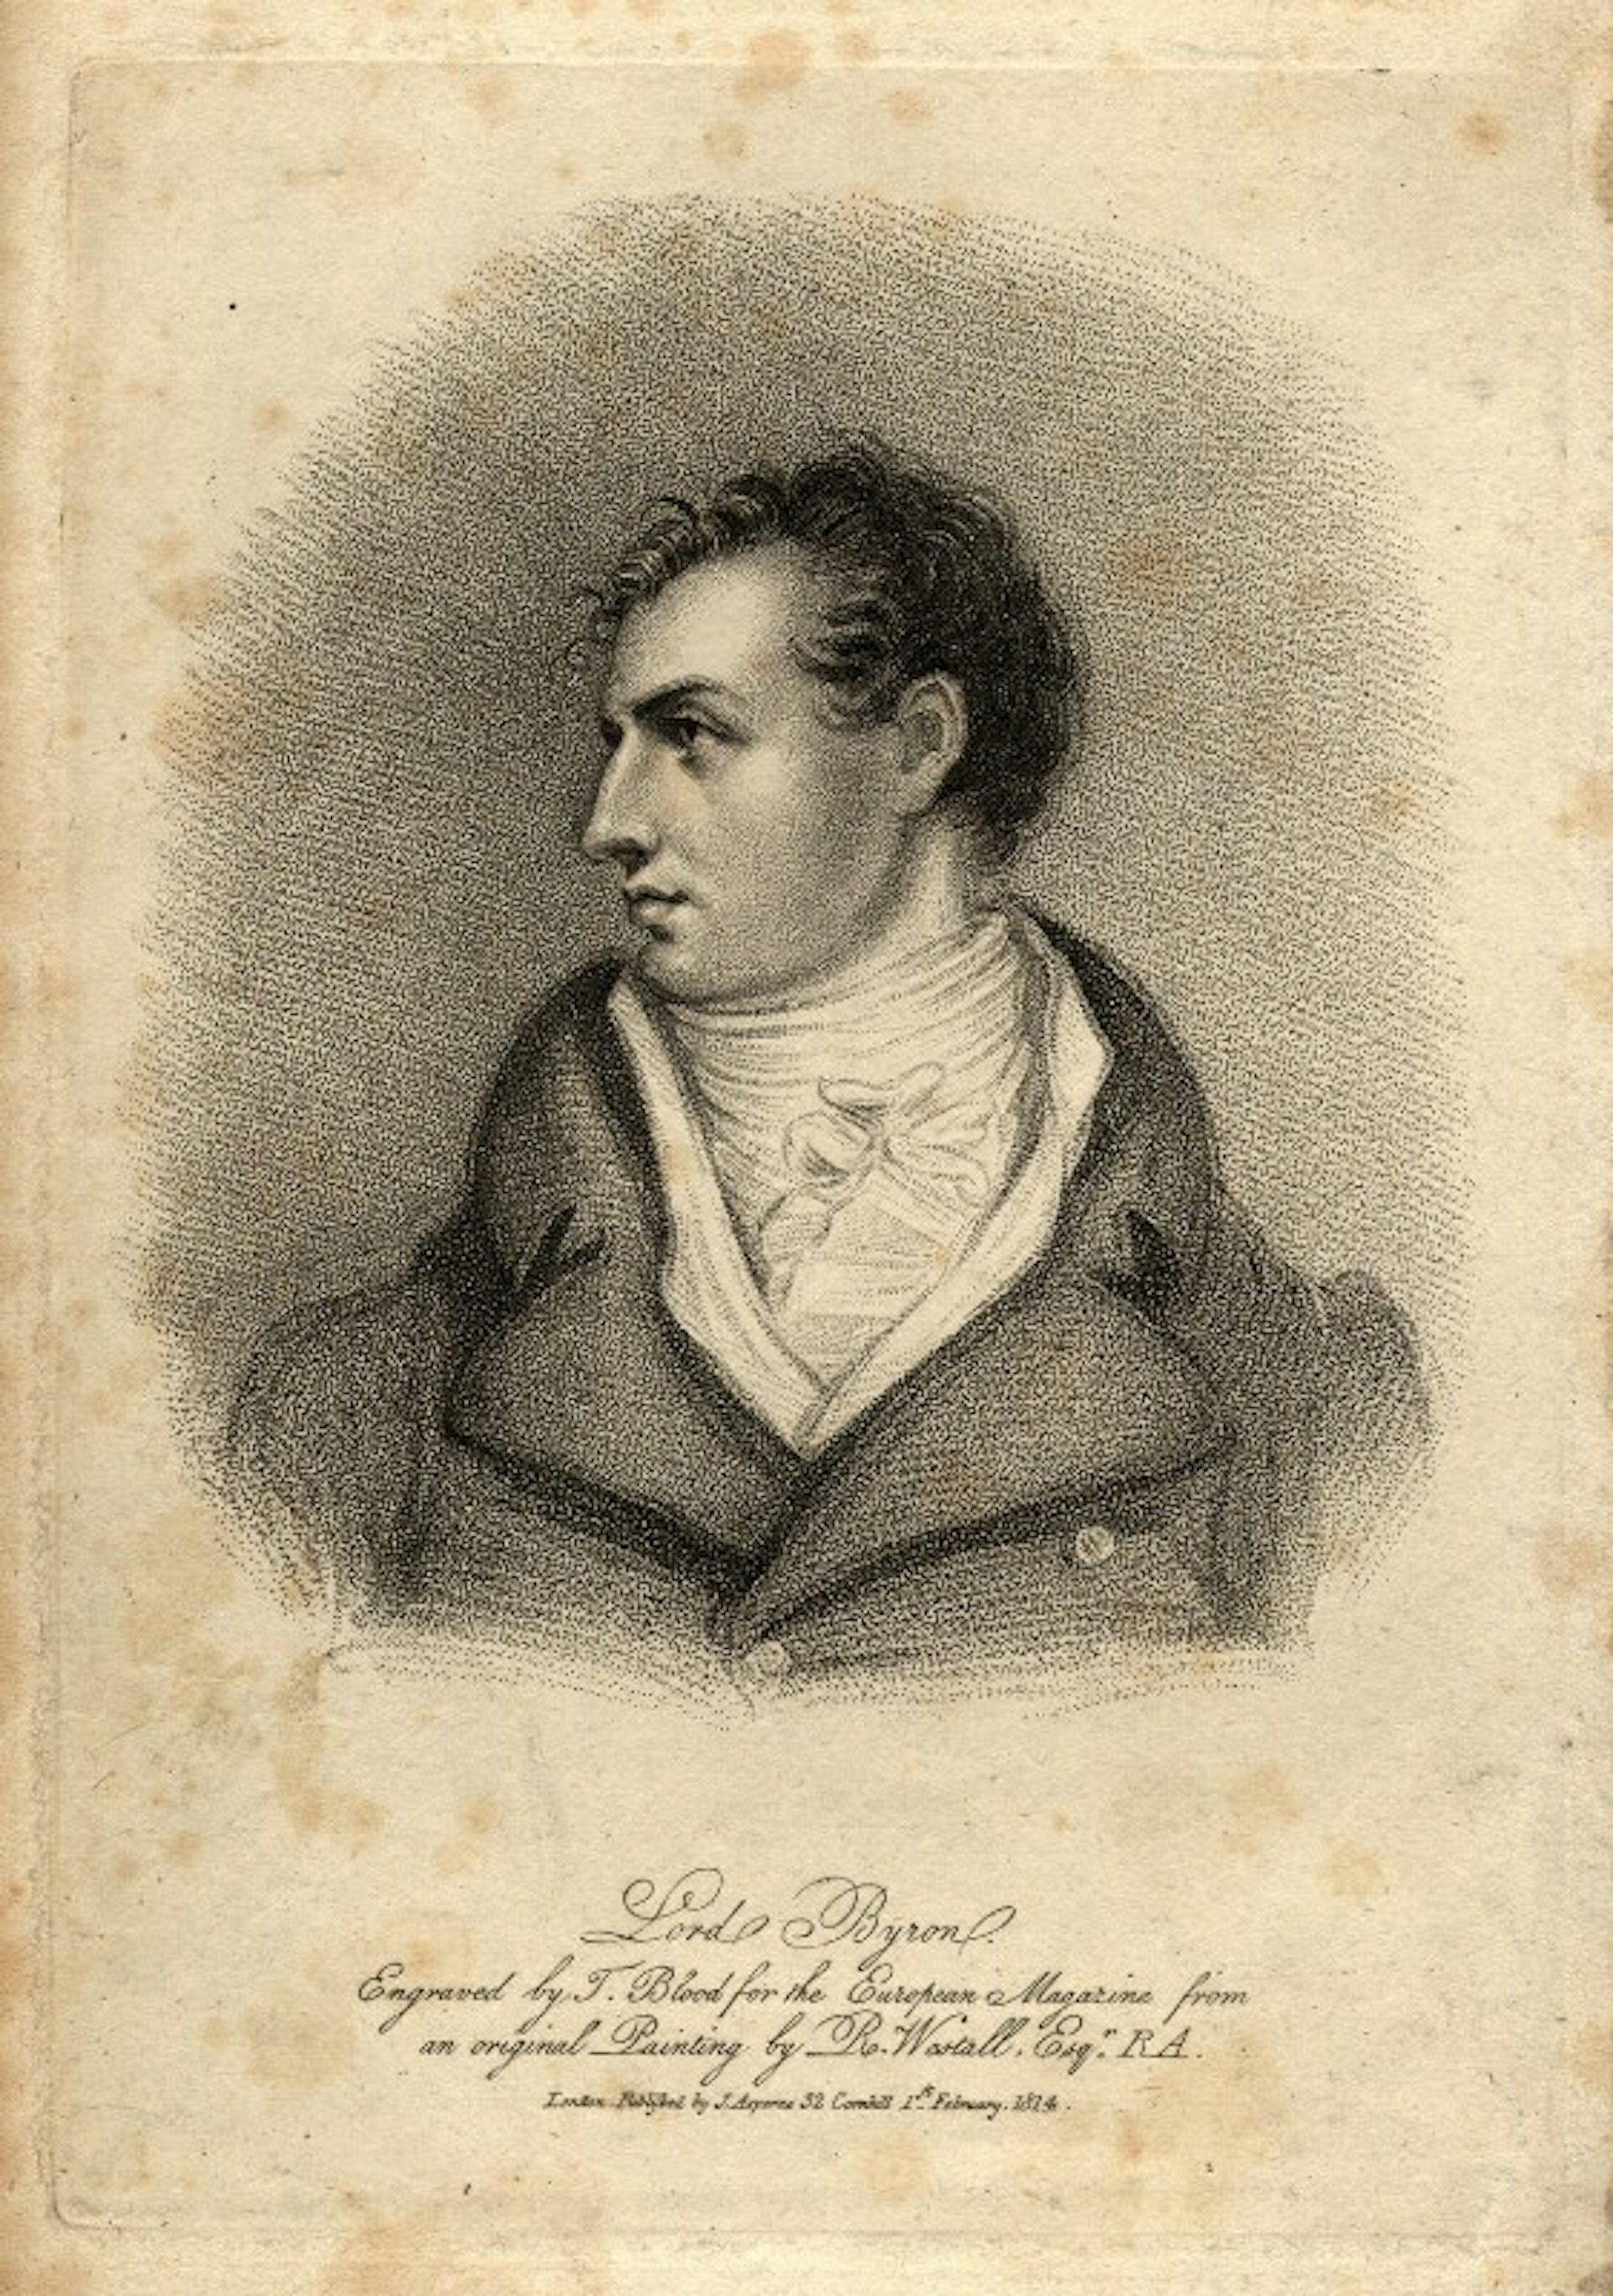 Stipple engraving of man in profile